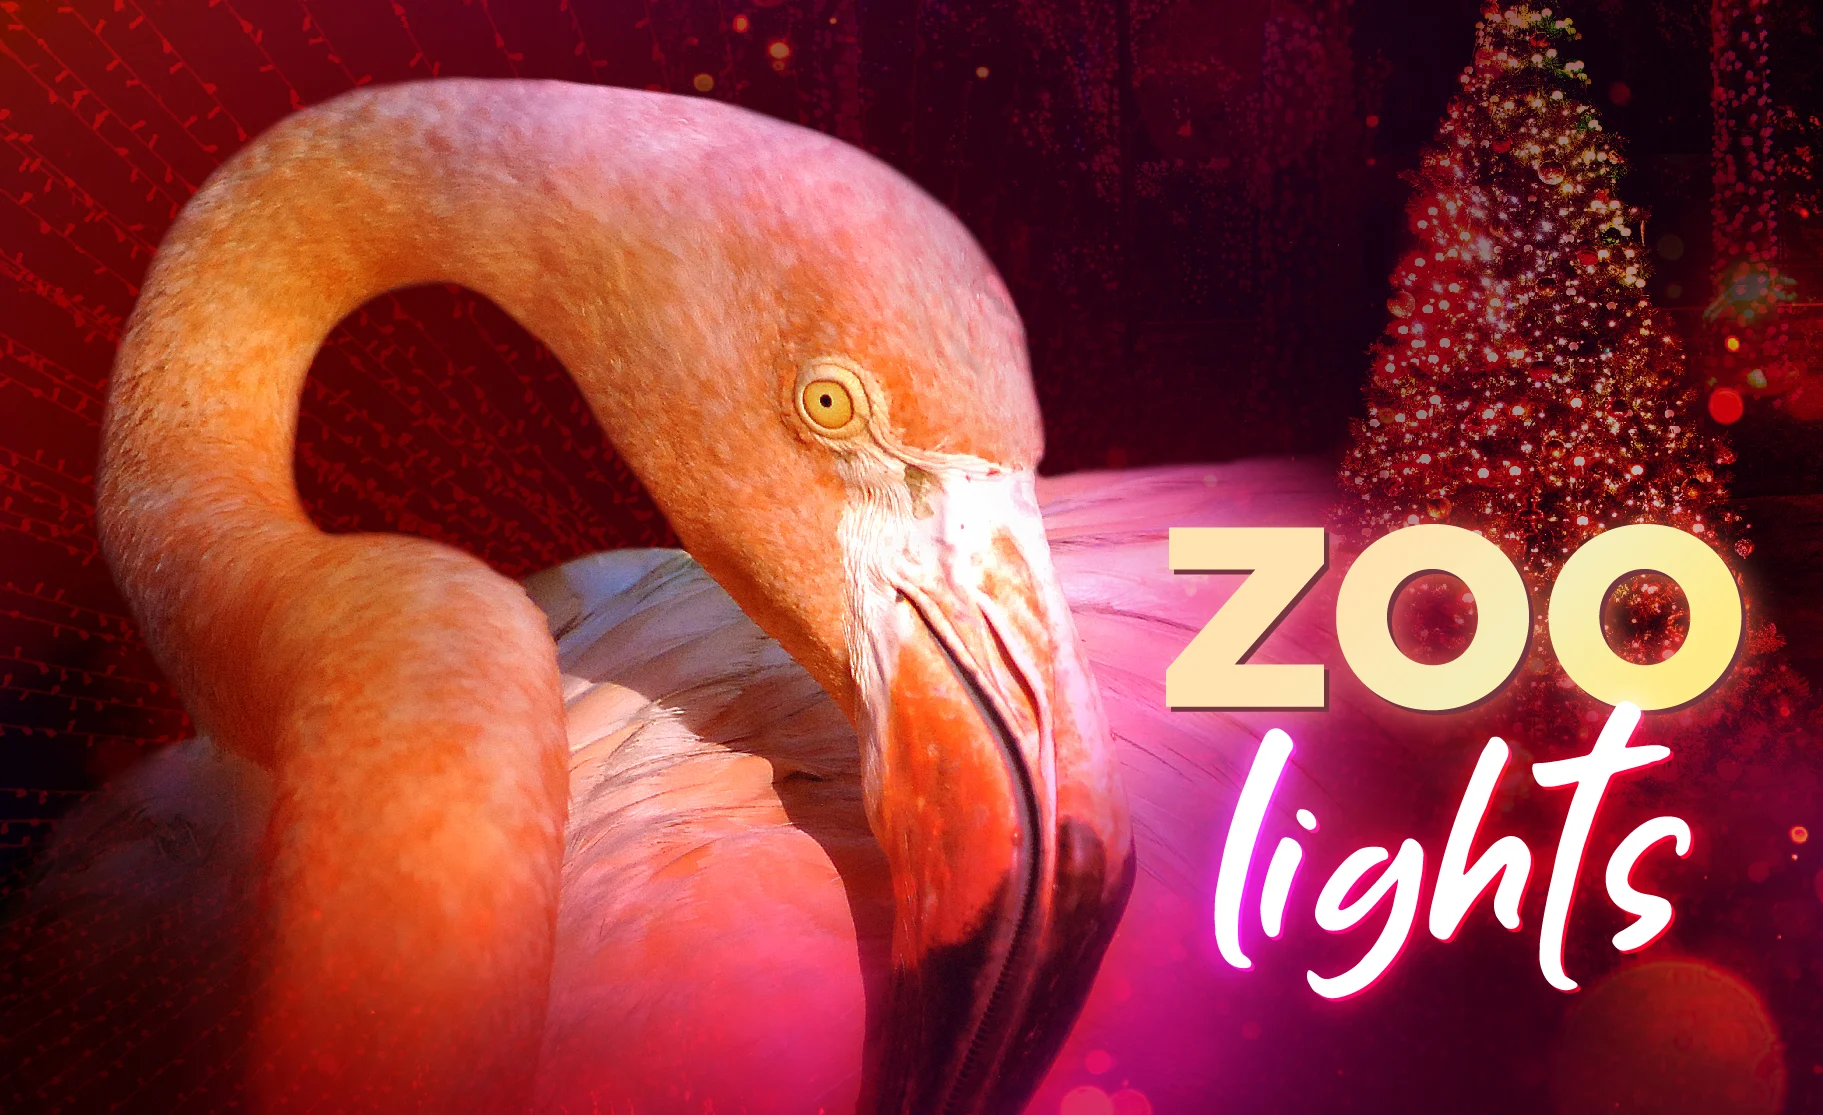 Zoo Lights Miami